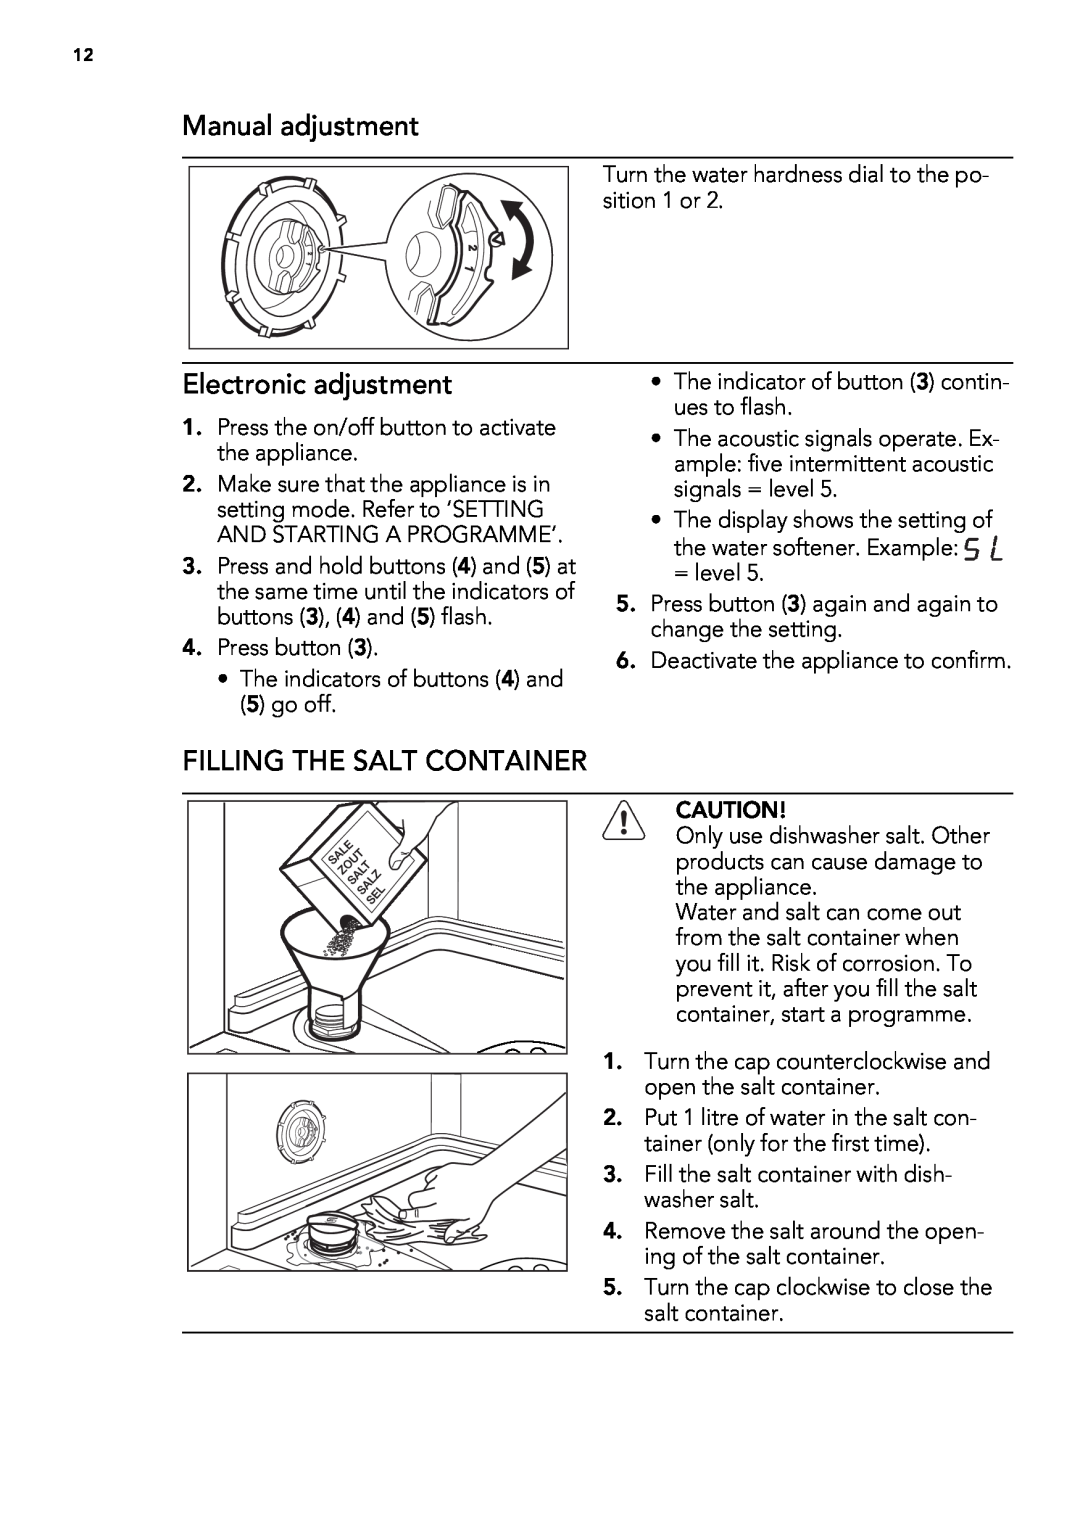 AEG 78400 VI user manual Manual adjustment, Electronic adjustment, Filling The Salt Container 